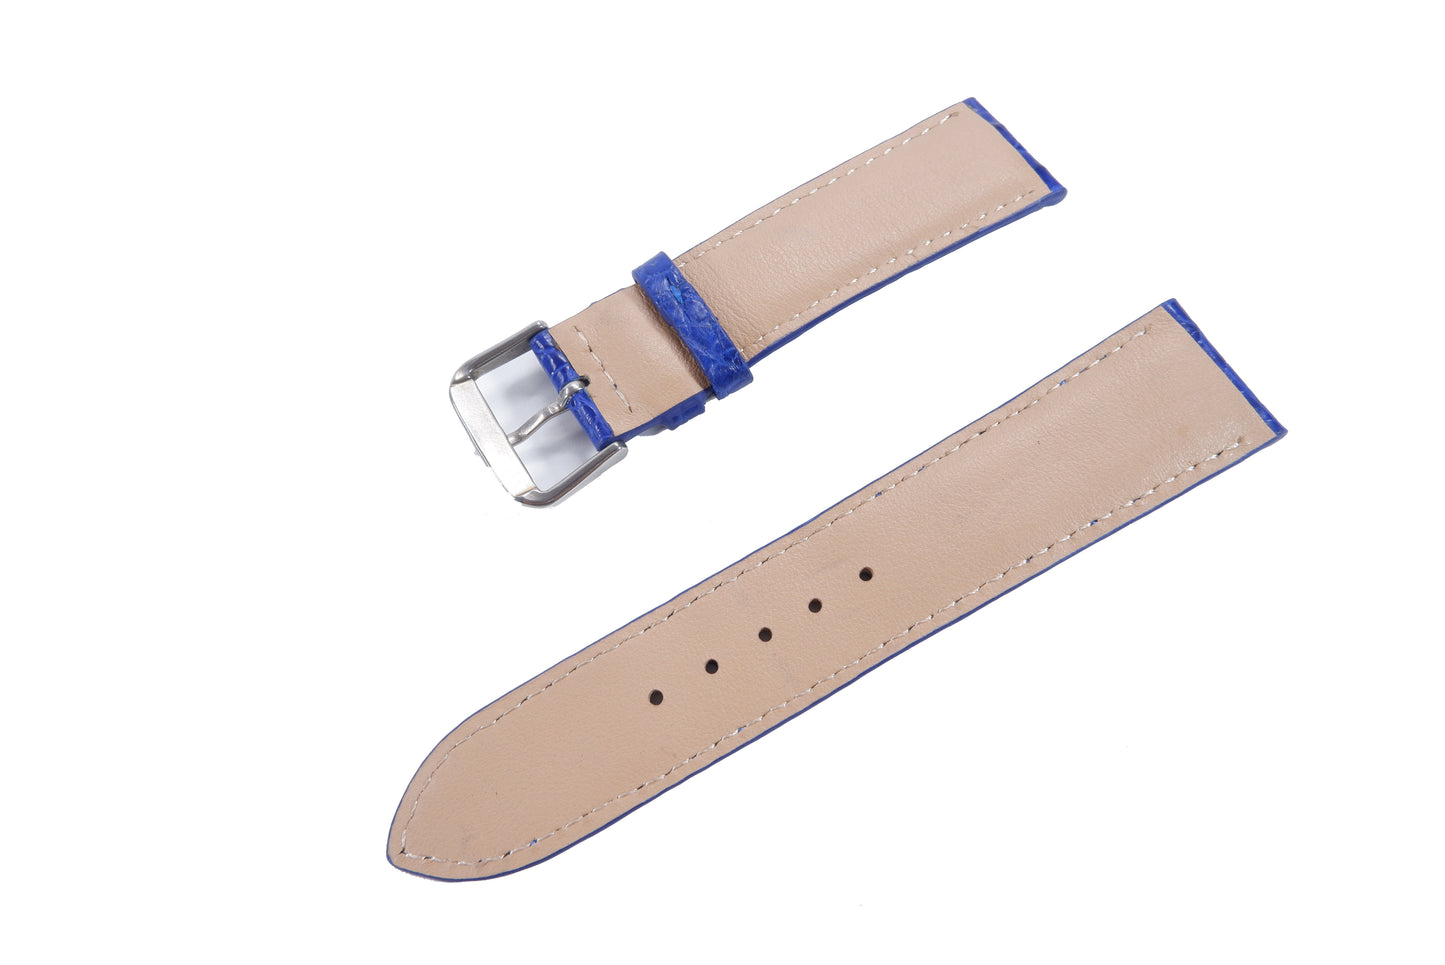 Genuine Crocodile Skin Leather Watch Strap Blue Band with Buckle